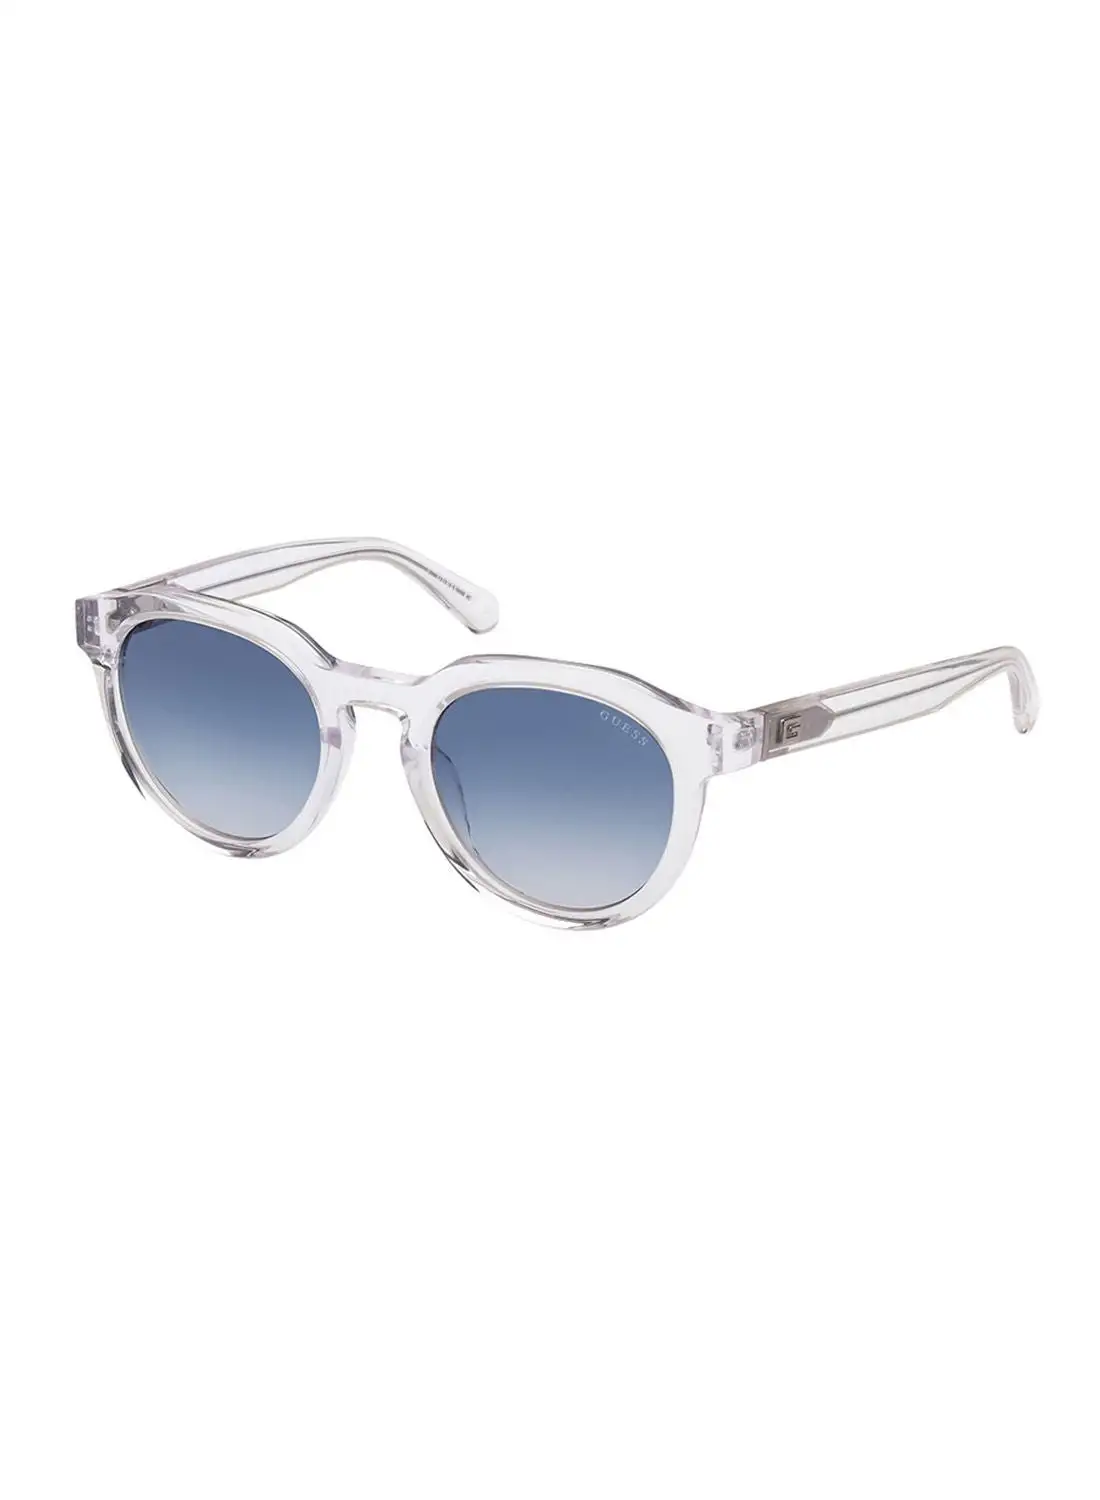 GUESS Sunglasses For Men GU0006326W50